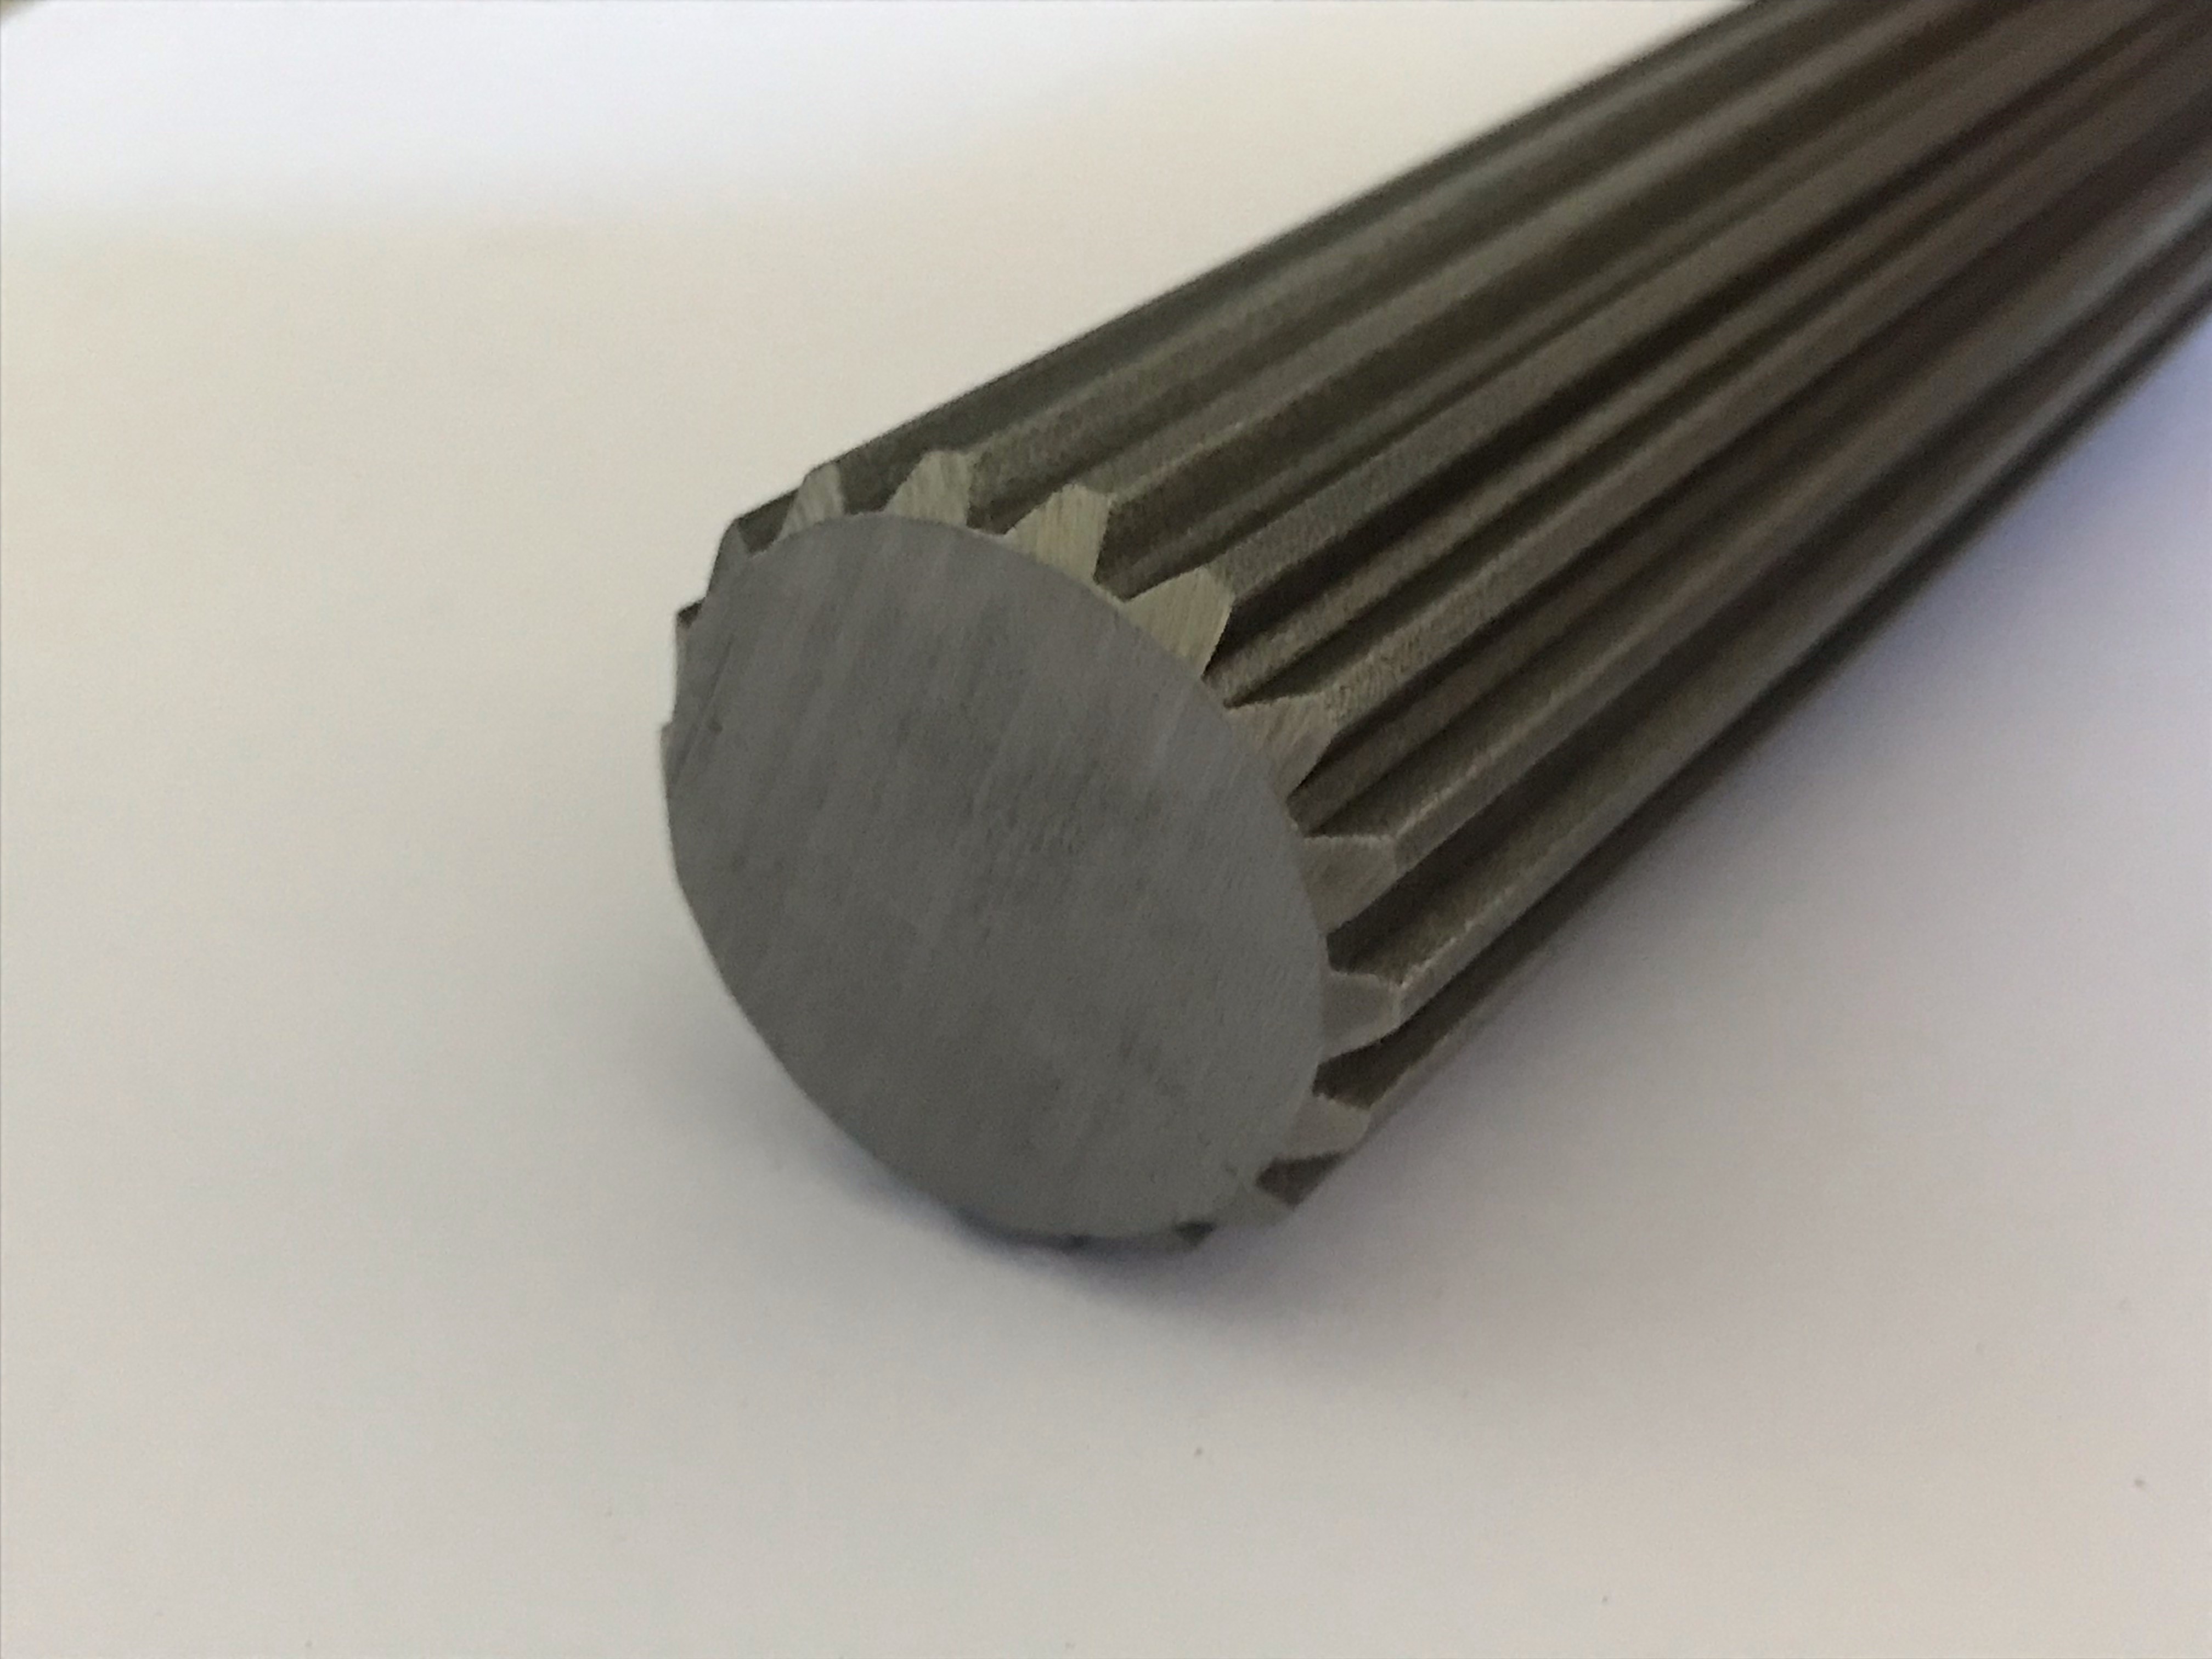 material C45 Spline shaft similar to DIN 14 profile KW21X25 x 1000mm long